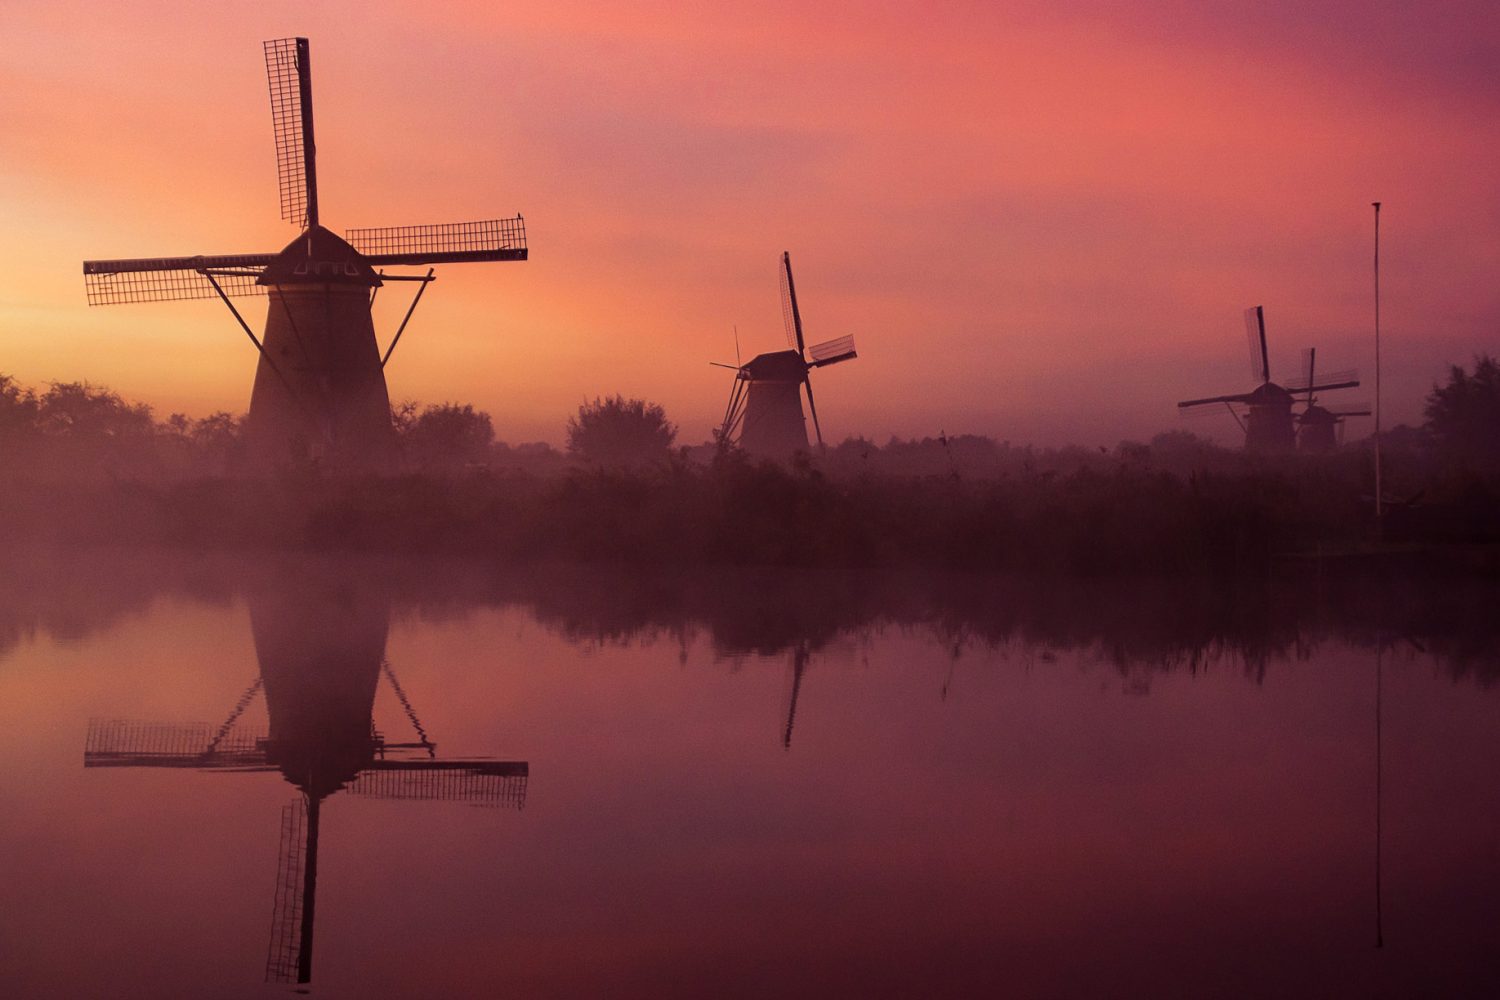 Windmills Netherlands photo tour